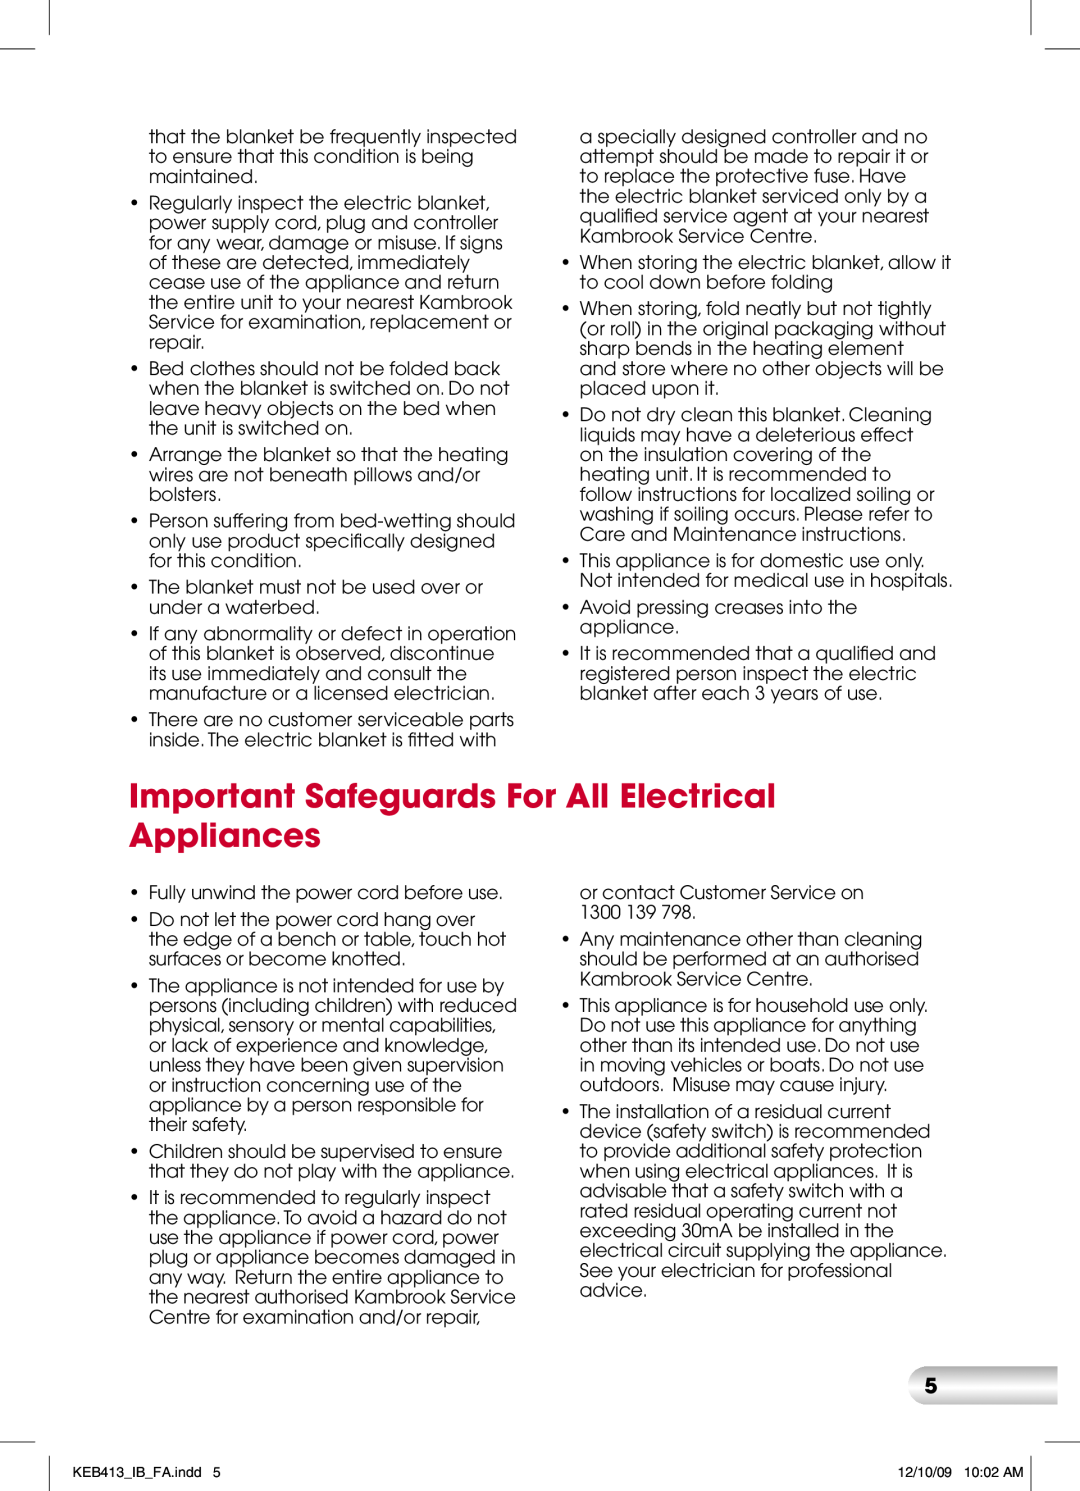 Kambrook KEB413, KEB533, KEB433, KEB513 manual Important Safeguards For All Electrical Appliances 